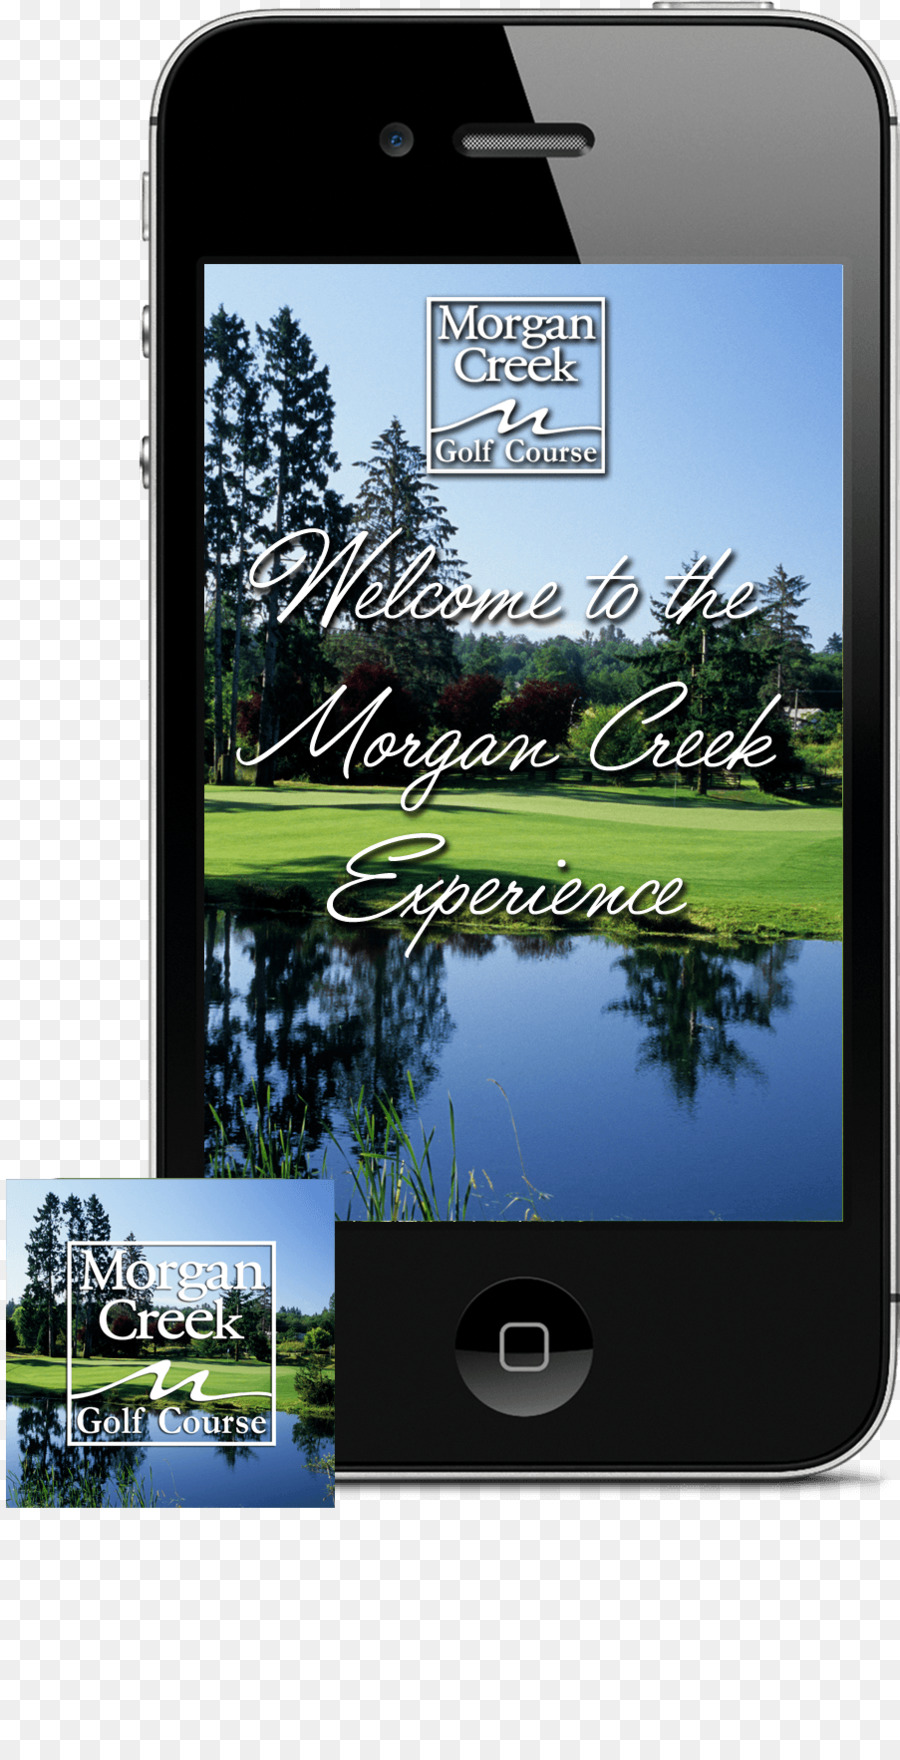 Nuovo Westminster Langley City Smartphone Morgan Creek Golf Course - smartphone